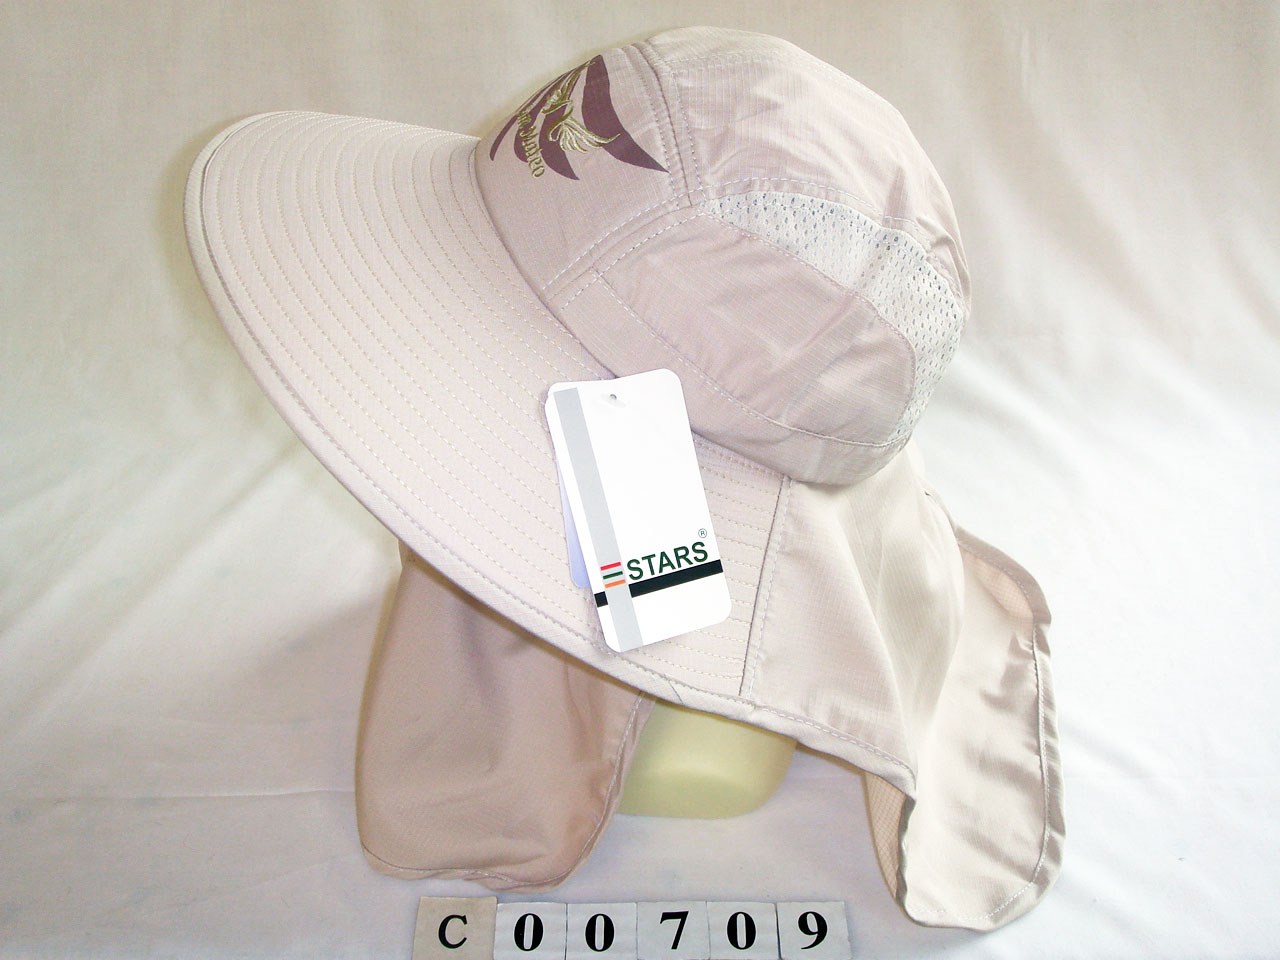 CO0709 固定式後披 可拆式前披 格子布五片式休閒帽子 SAN MATEO 三星製帽